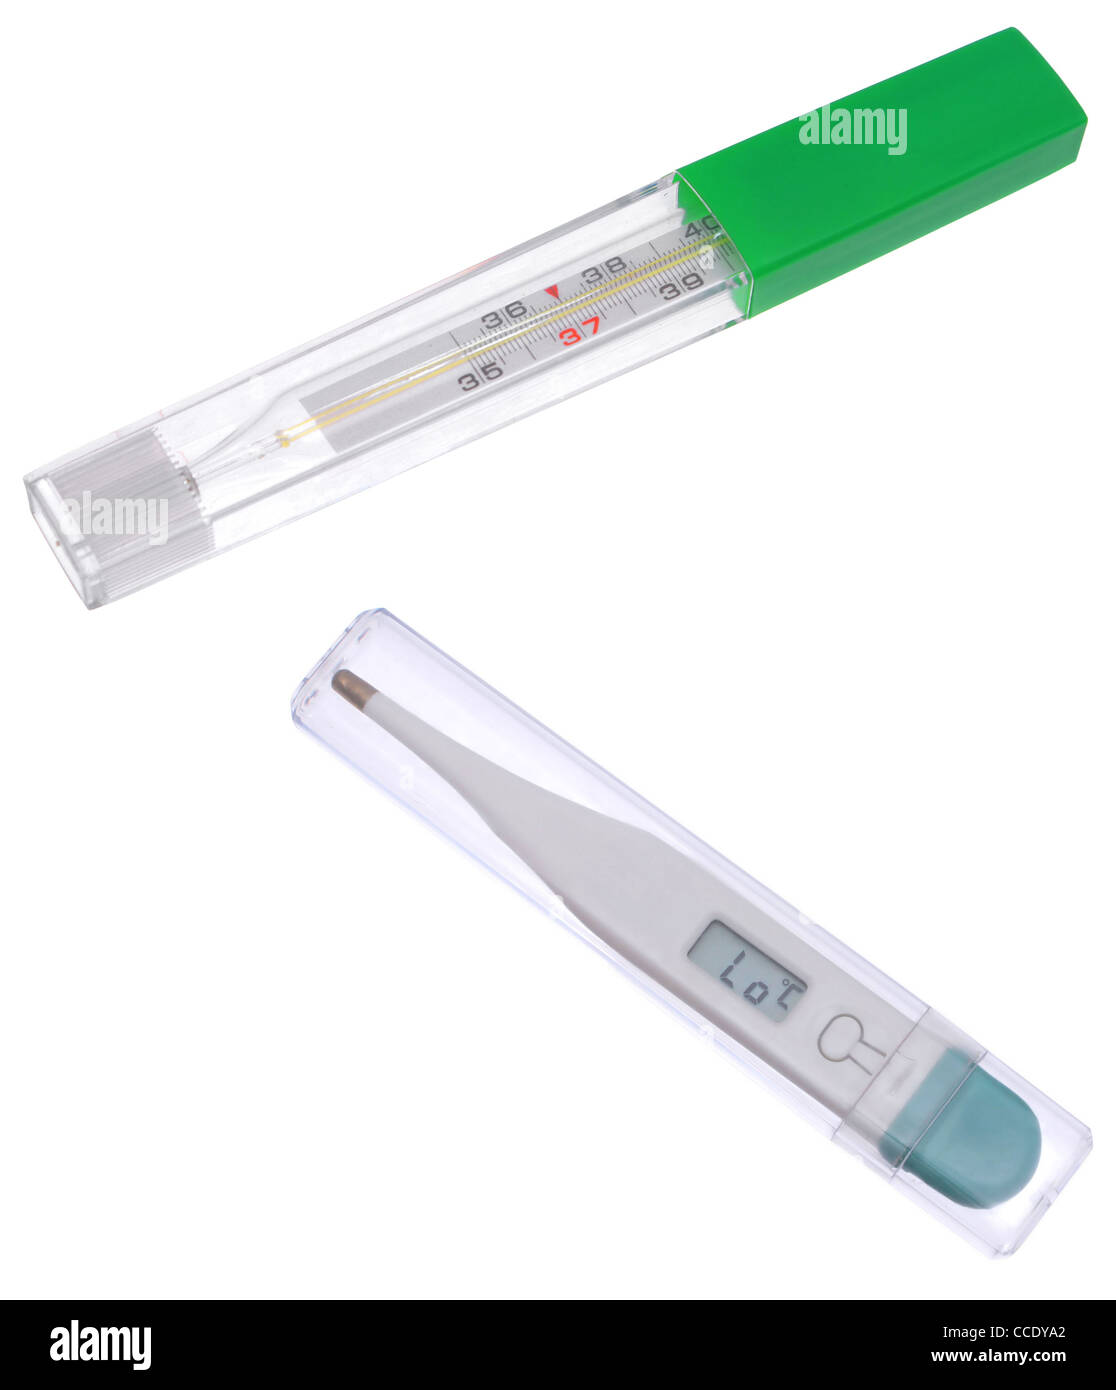 https://c8.alamy.com/comp/CCDYA2/digital-and-mercury-medical-thermometers-CCDYA2.jpg